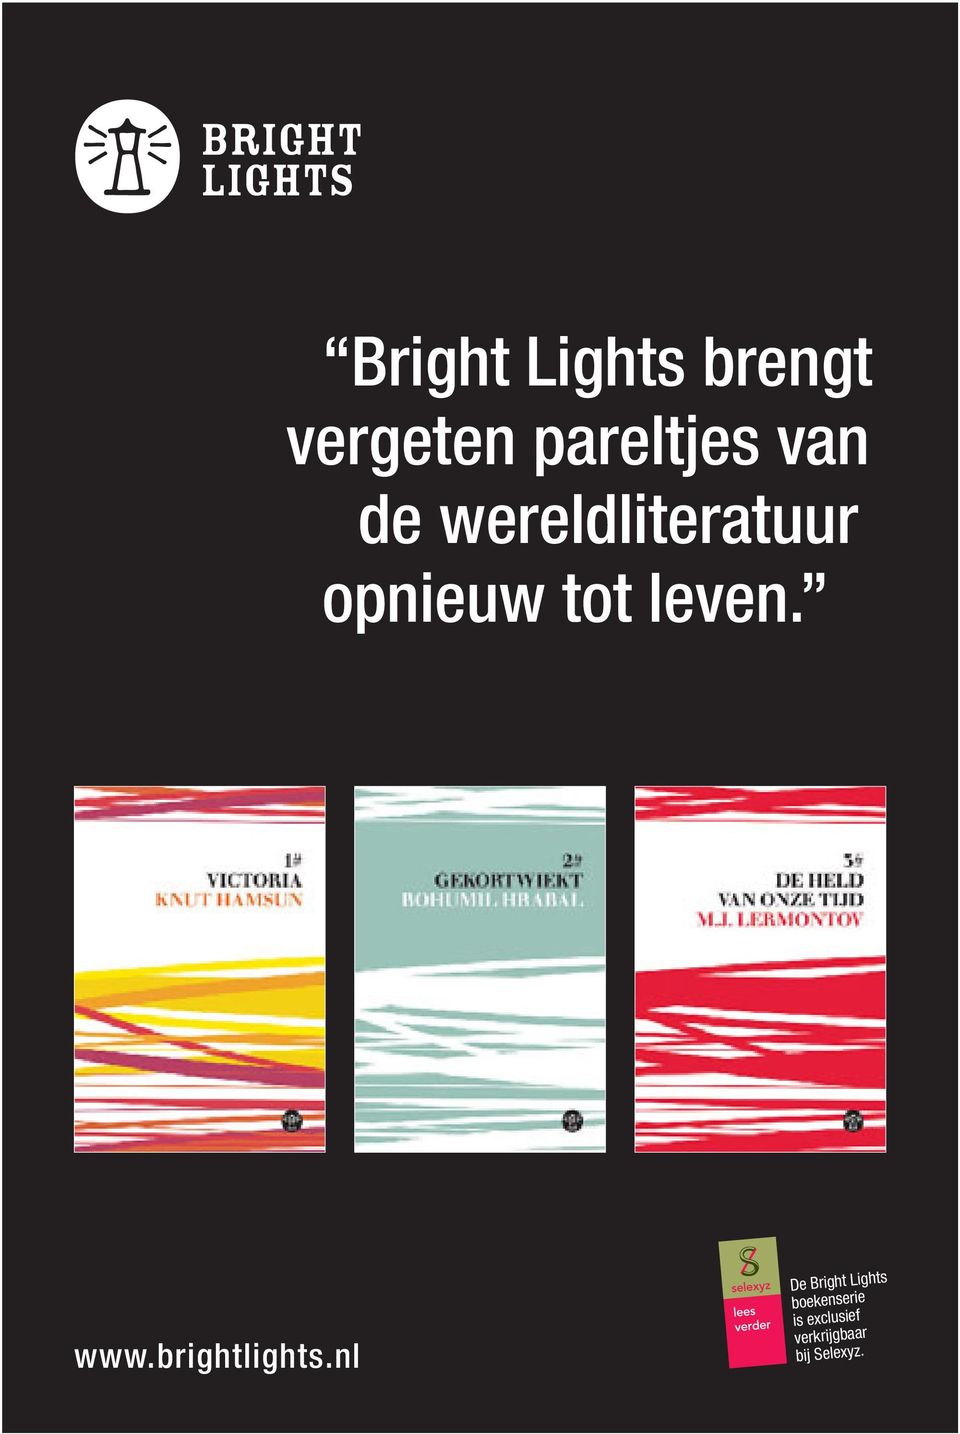 www.brightlights.